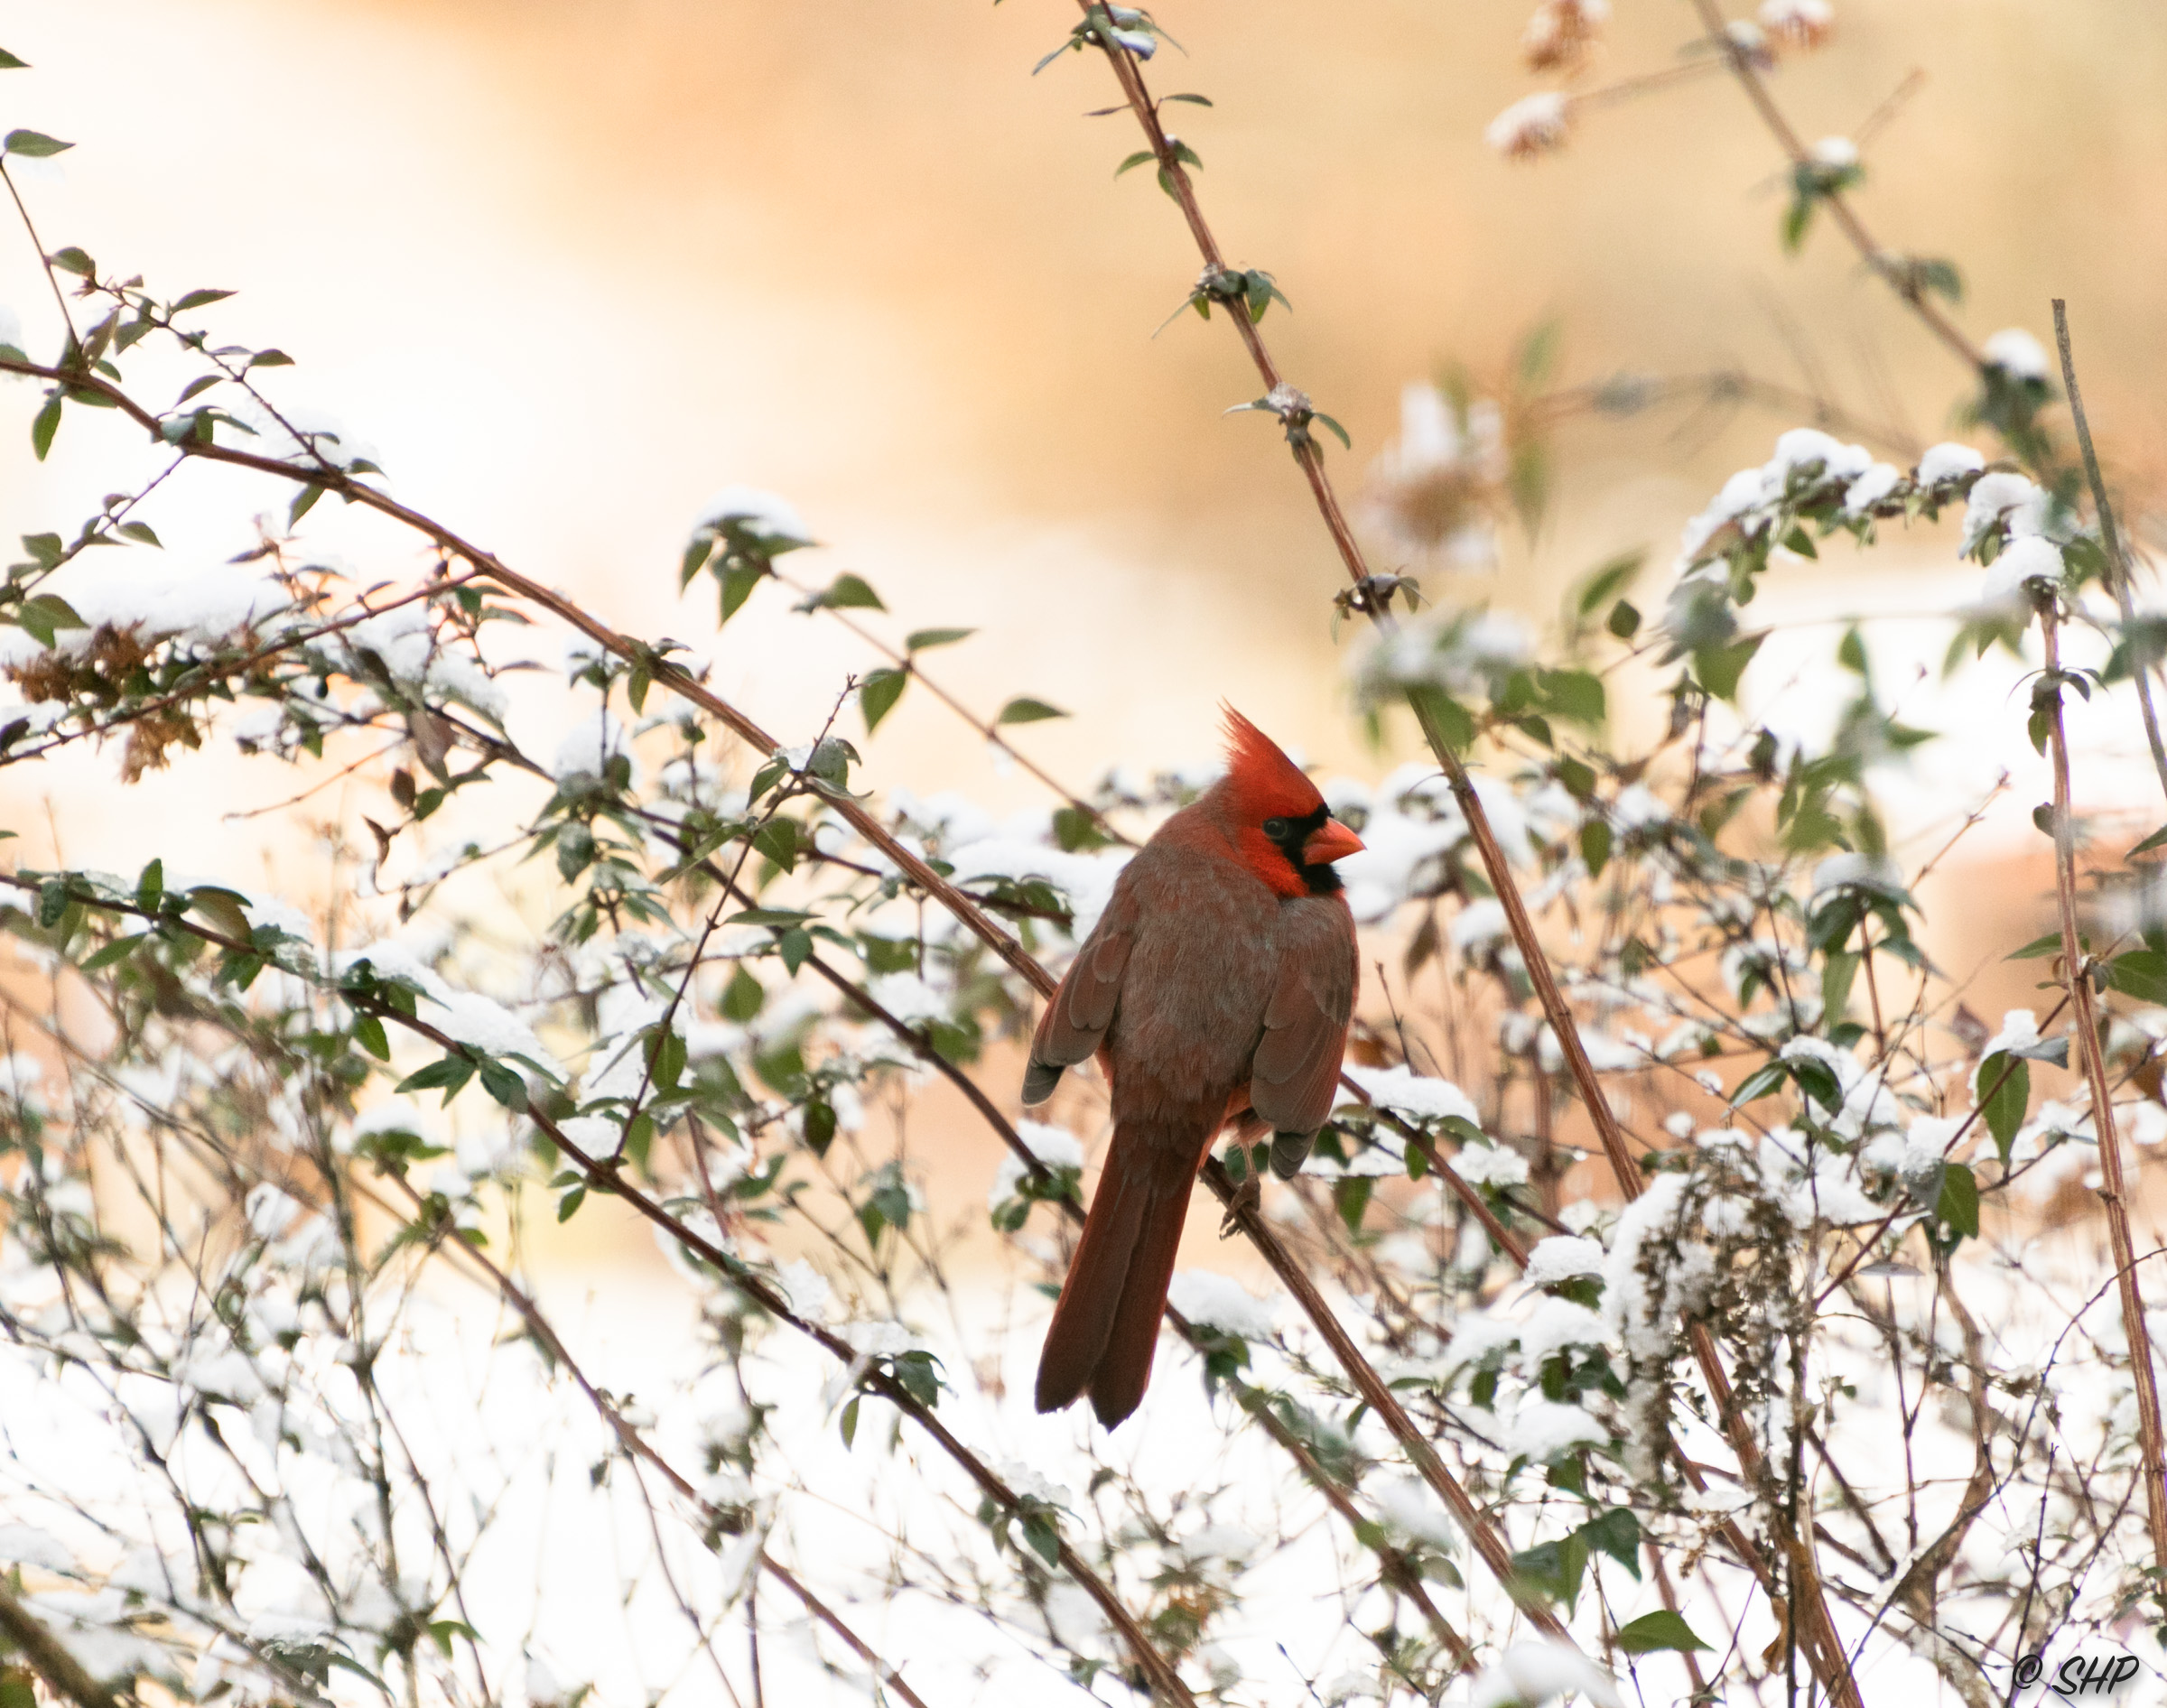 Female cardinal in snow